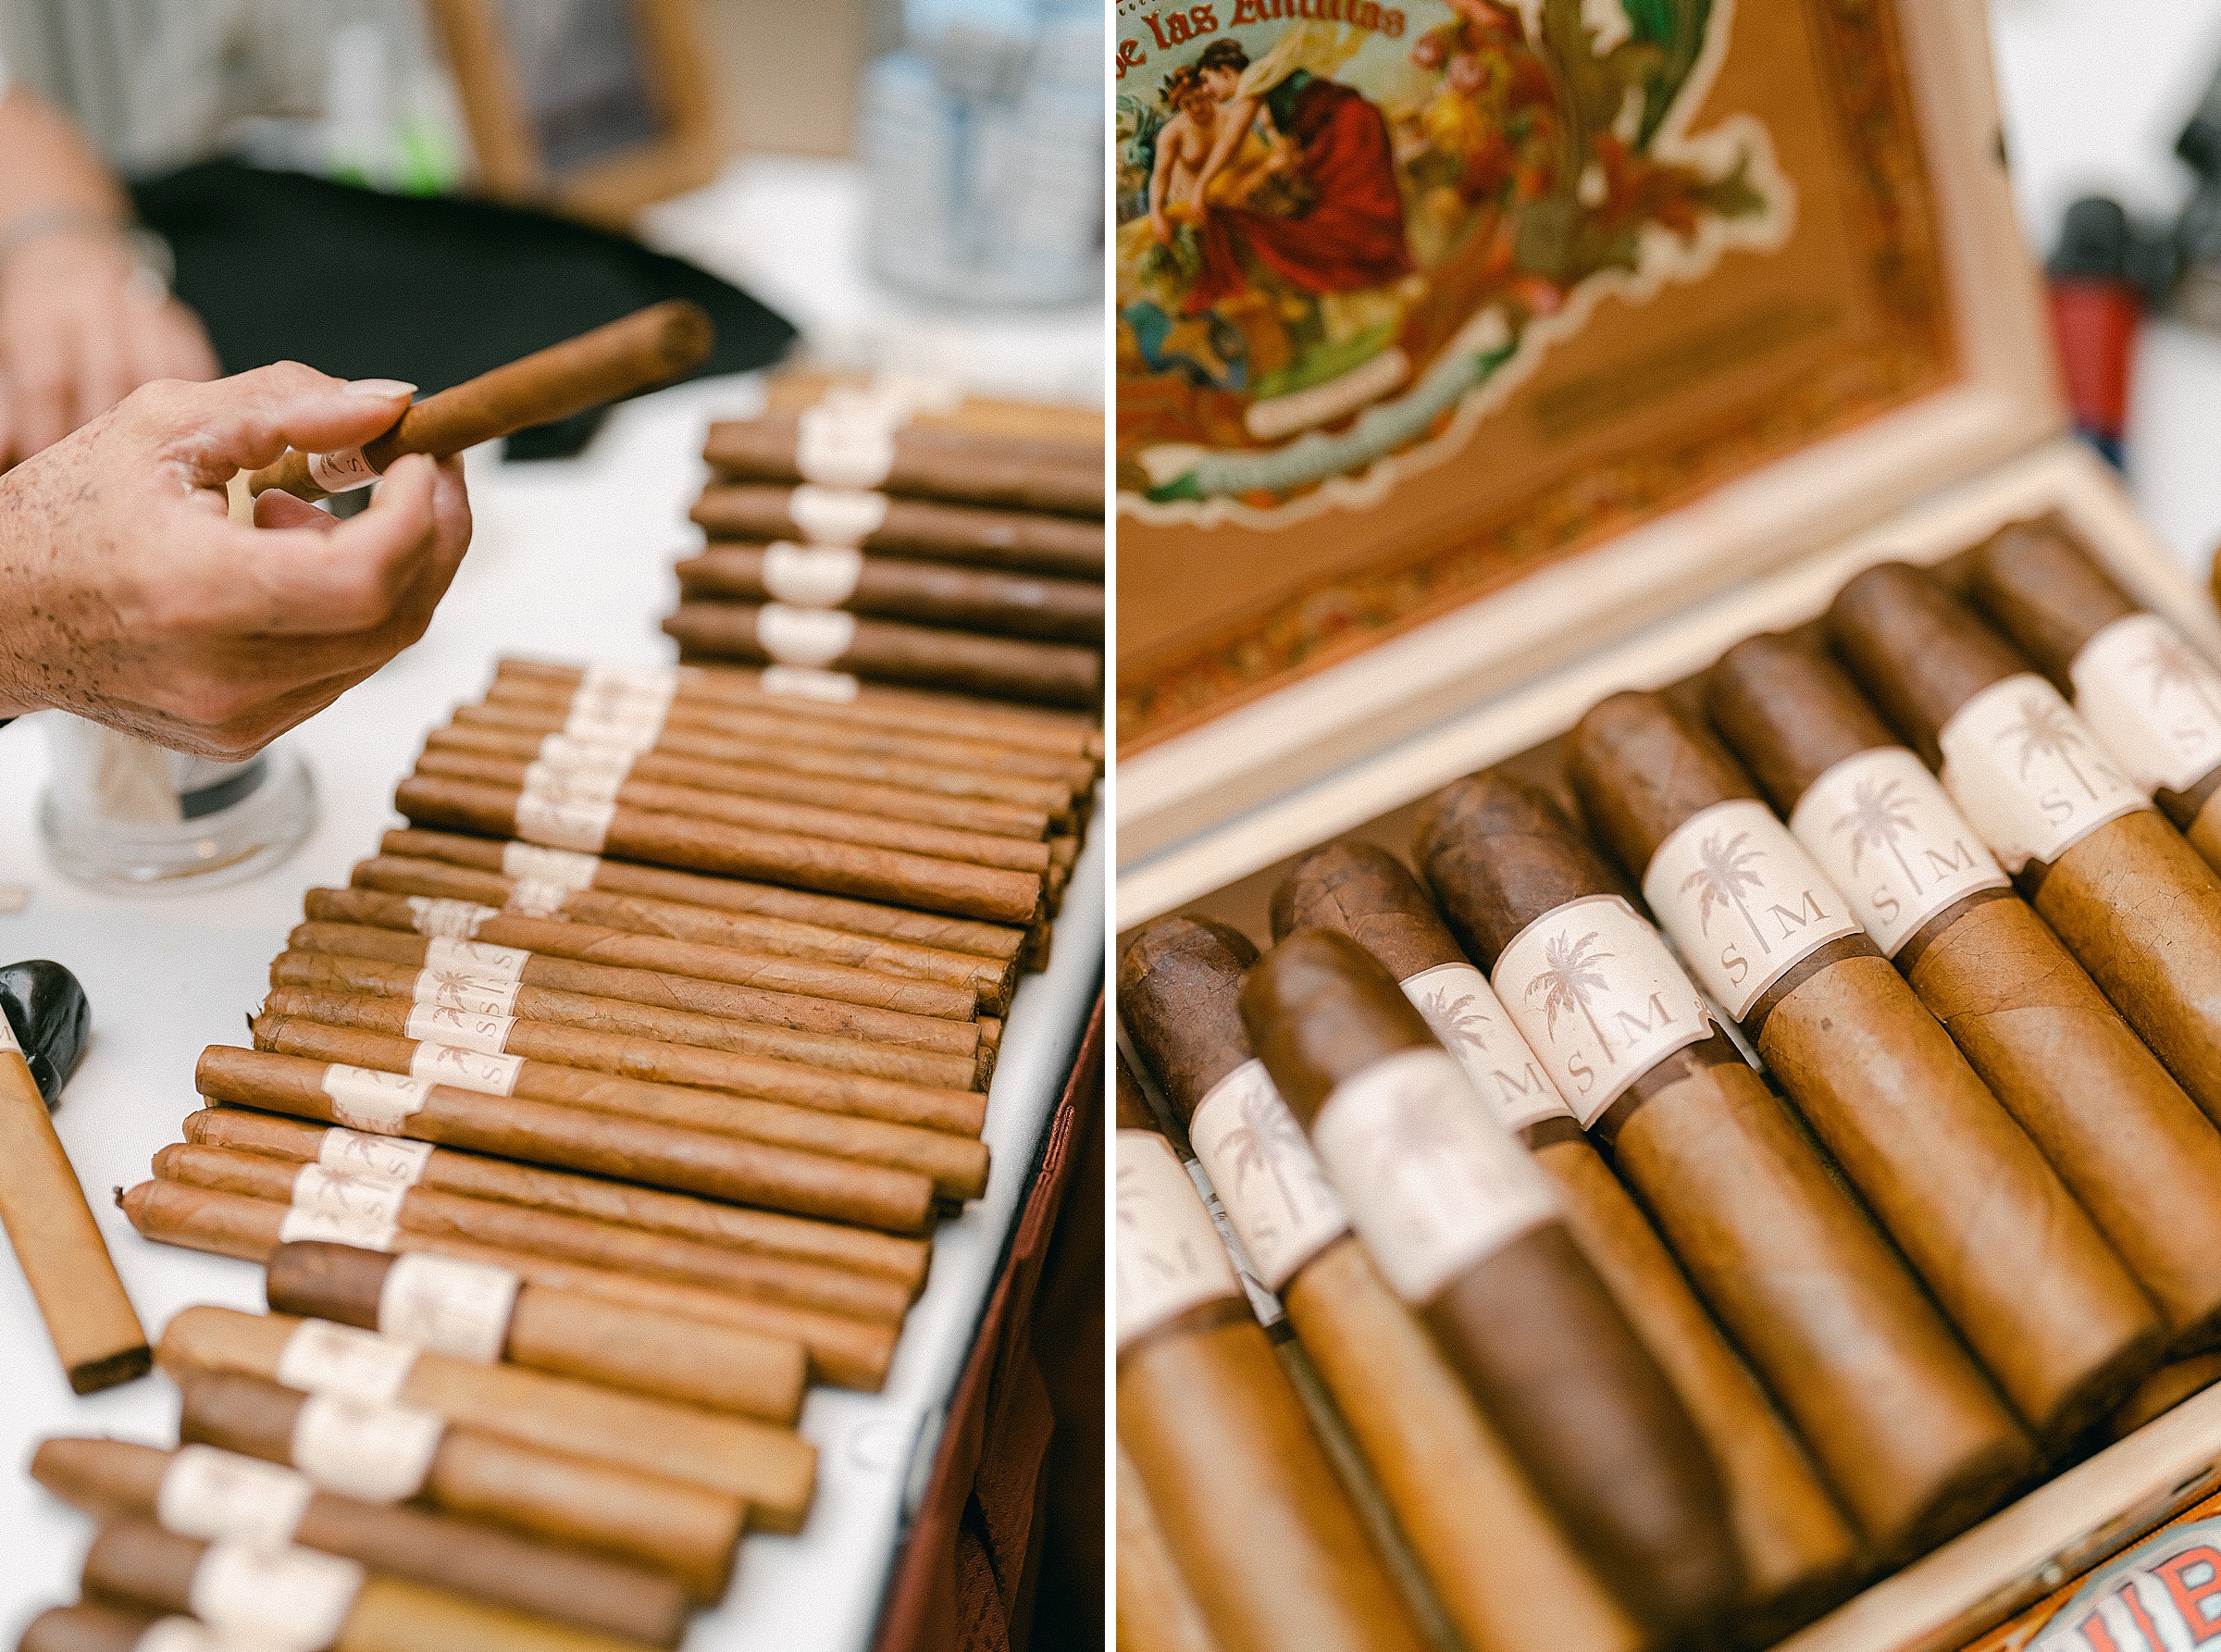 custom cuban cigars with their initials